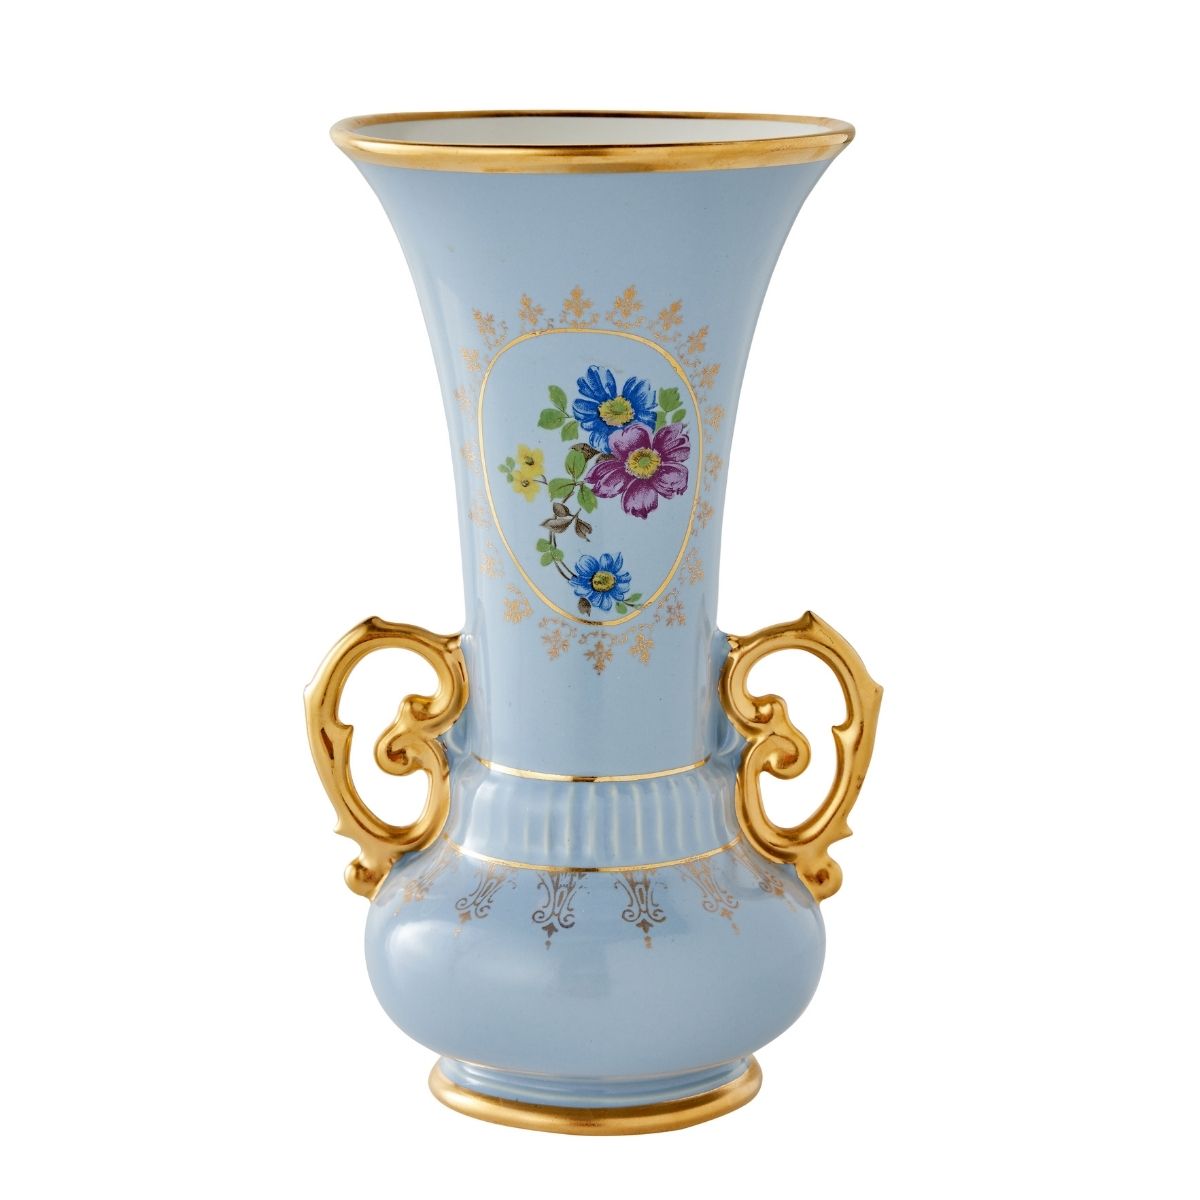 Abingdon Vase with Floral Decal - Caitlin Wilson Design